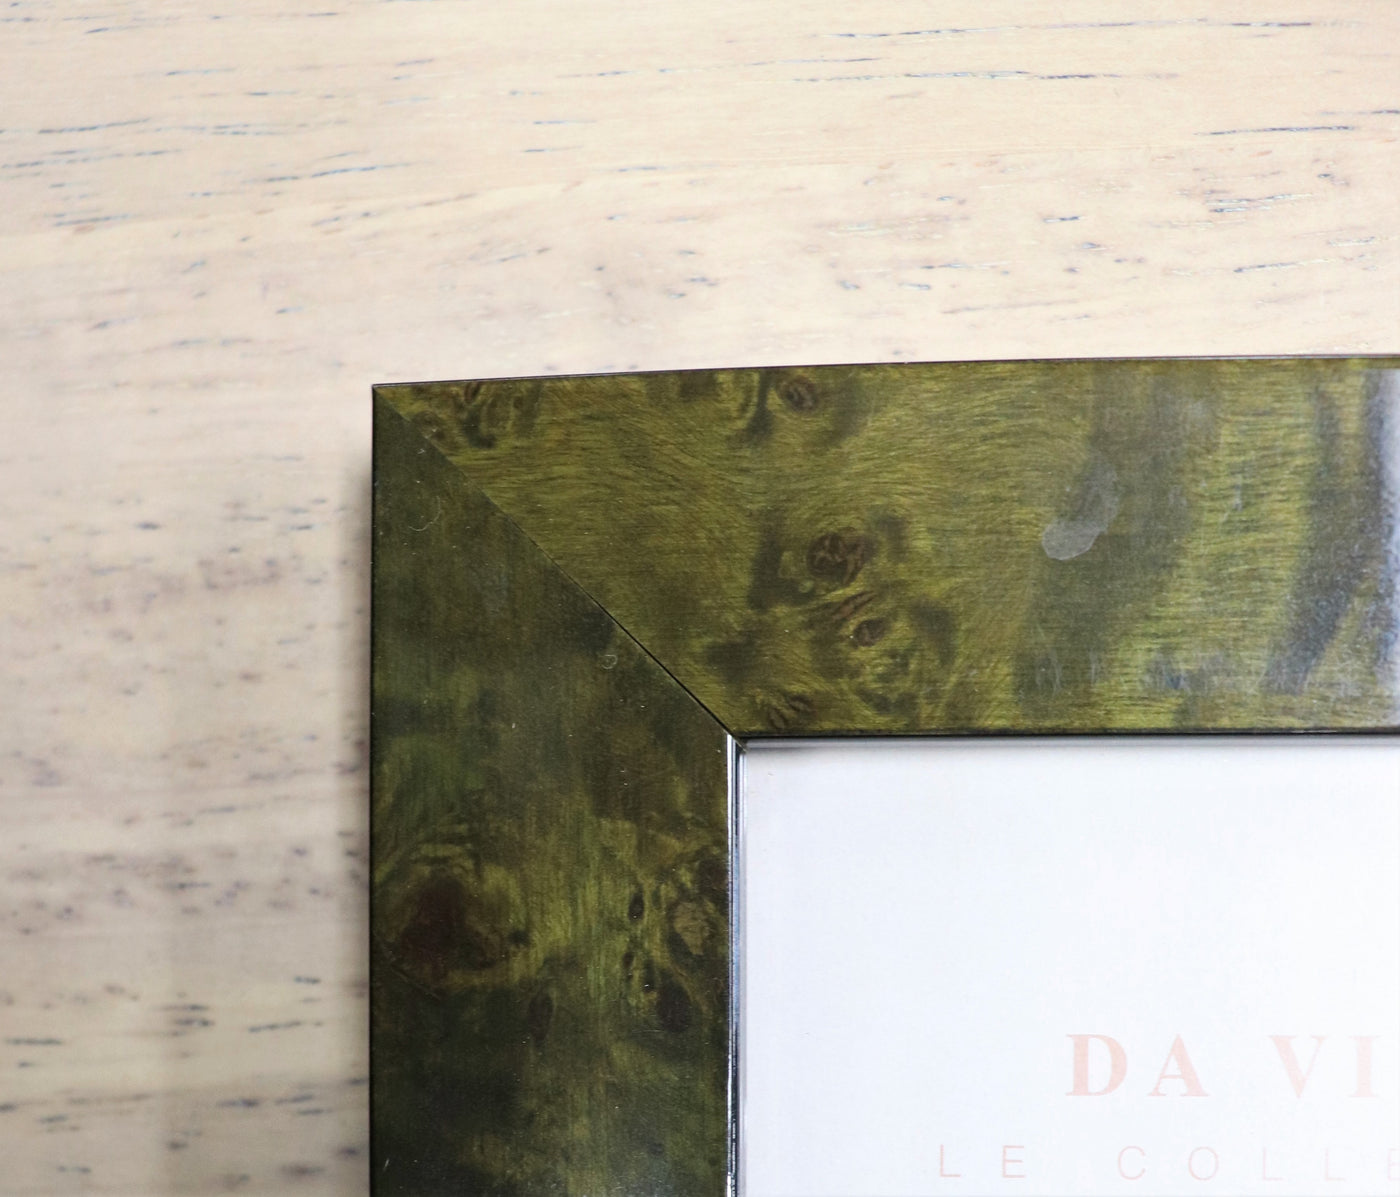 4" x 6" Green Frame -by Da Vinci